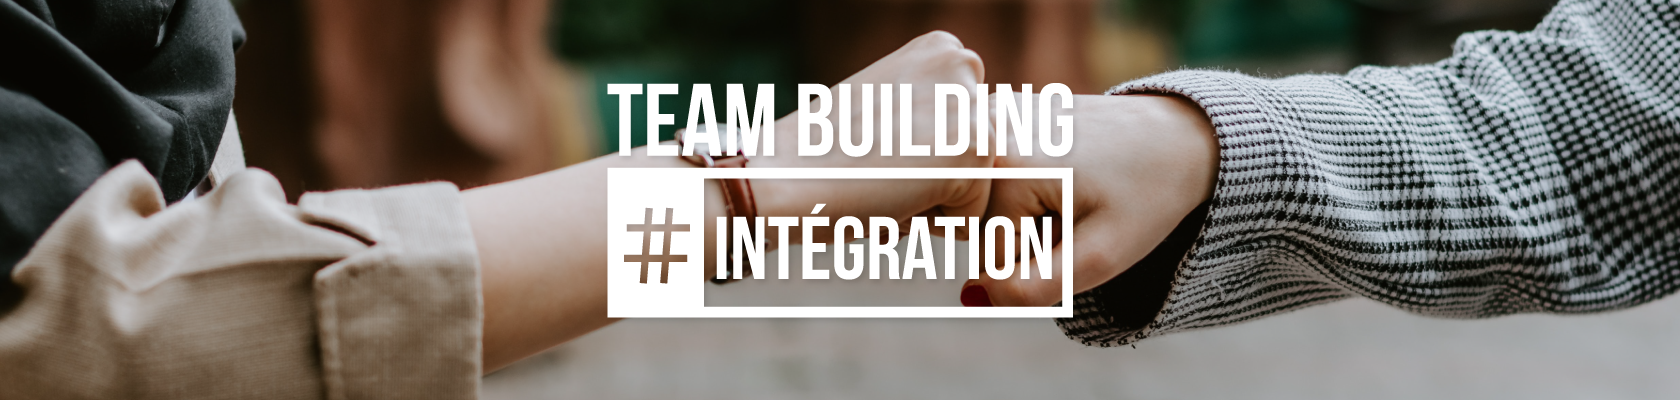 Team Building intégration 2